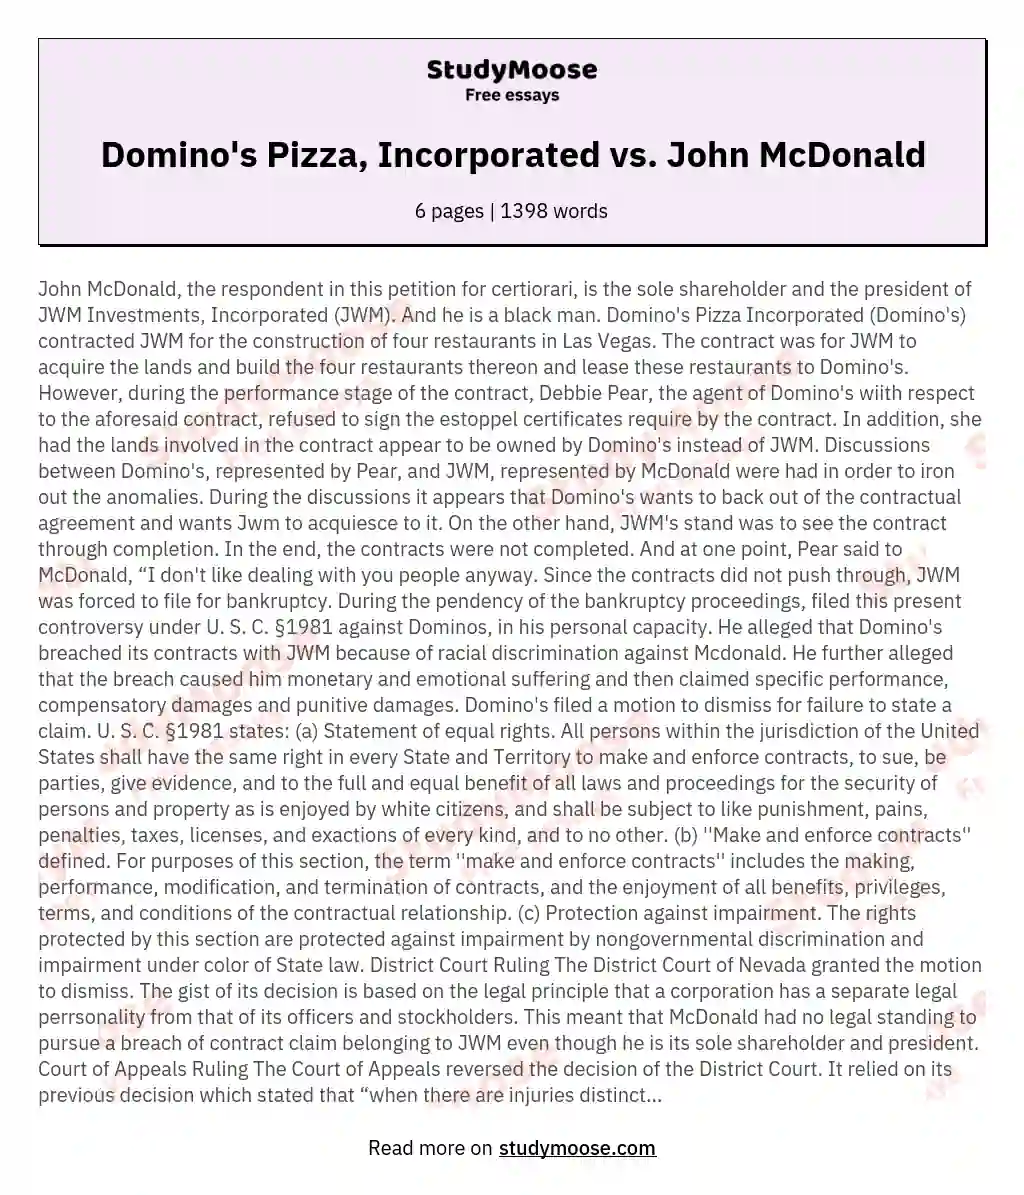 Domino's Pizza, Incorporated vs. John McDonald essay